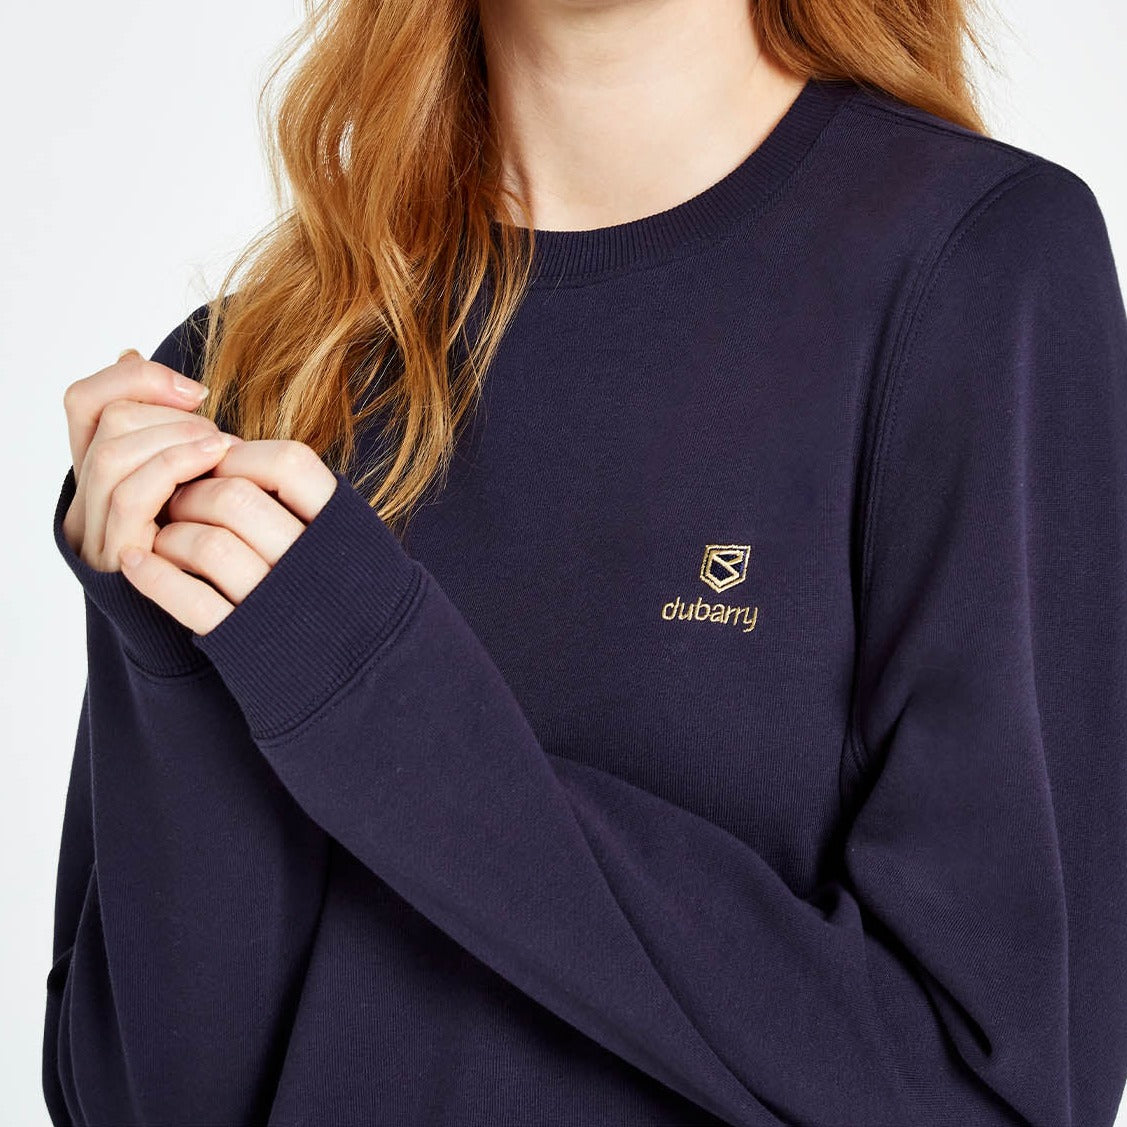 Dubarry Womens Glenside Sweatshirt #colour_navy